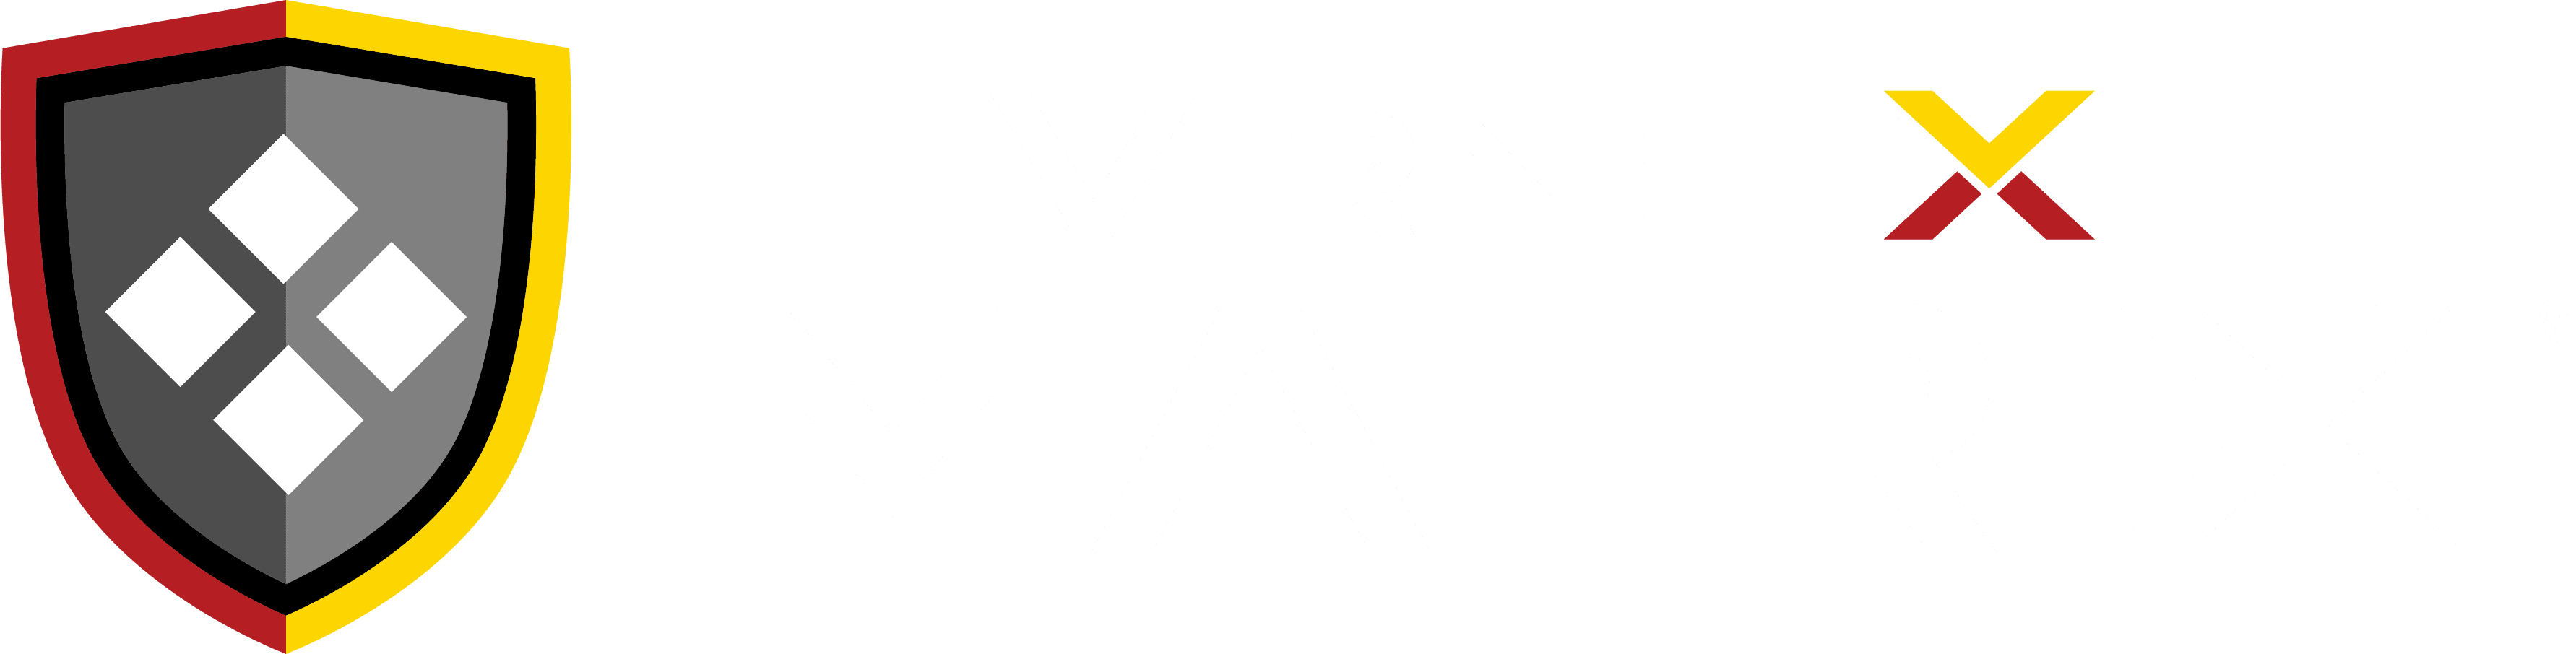 virnetx matrix logo